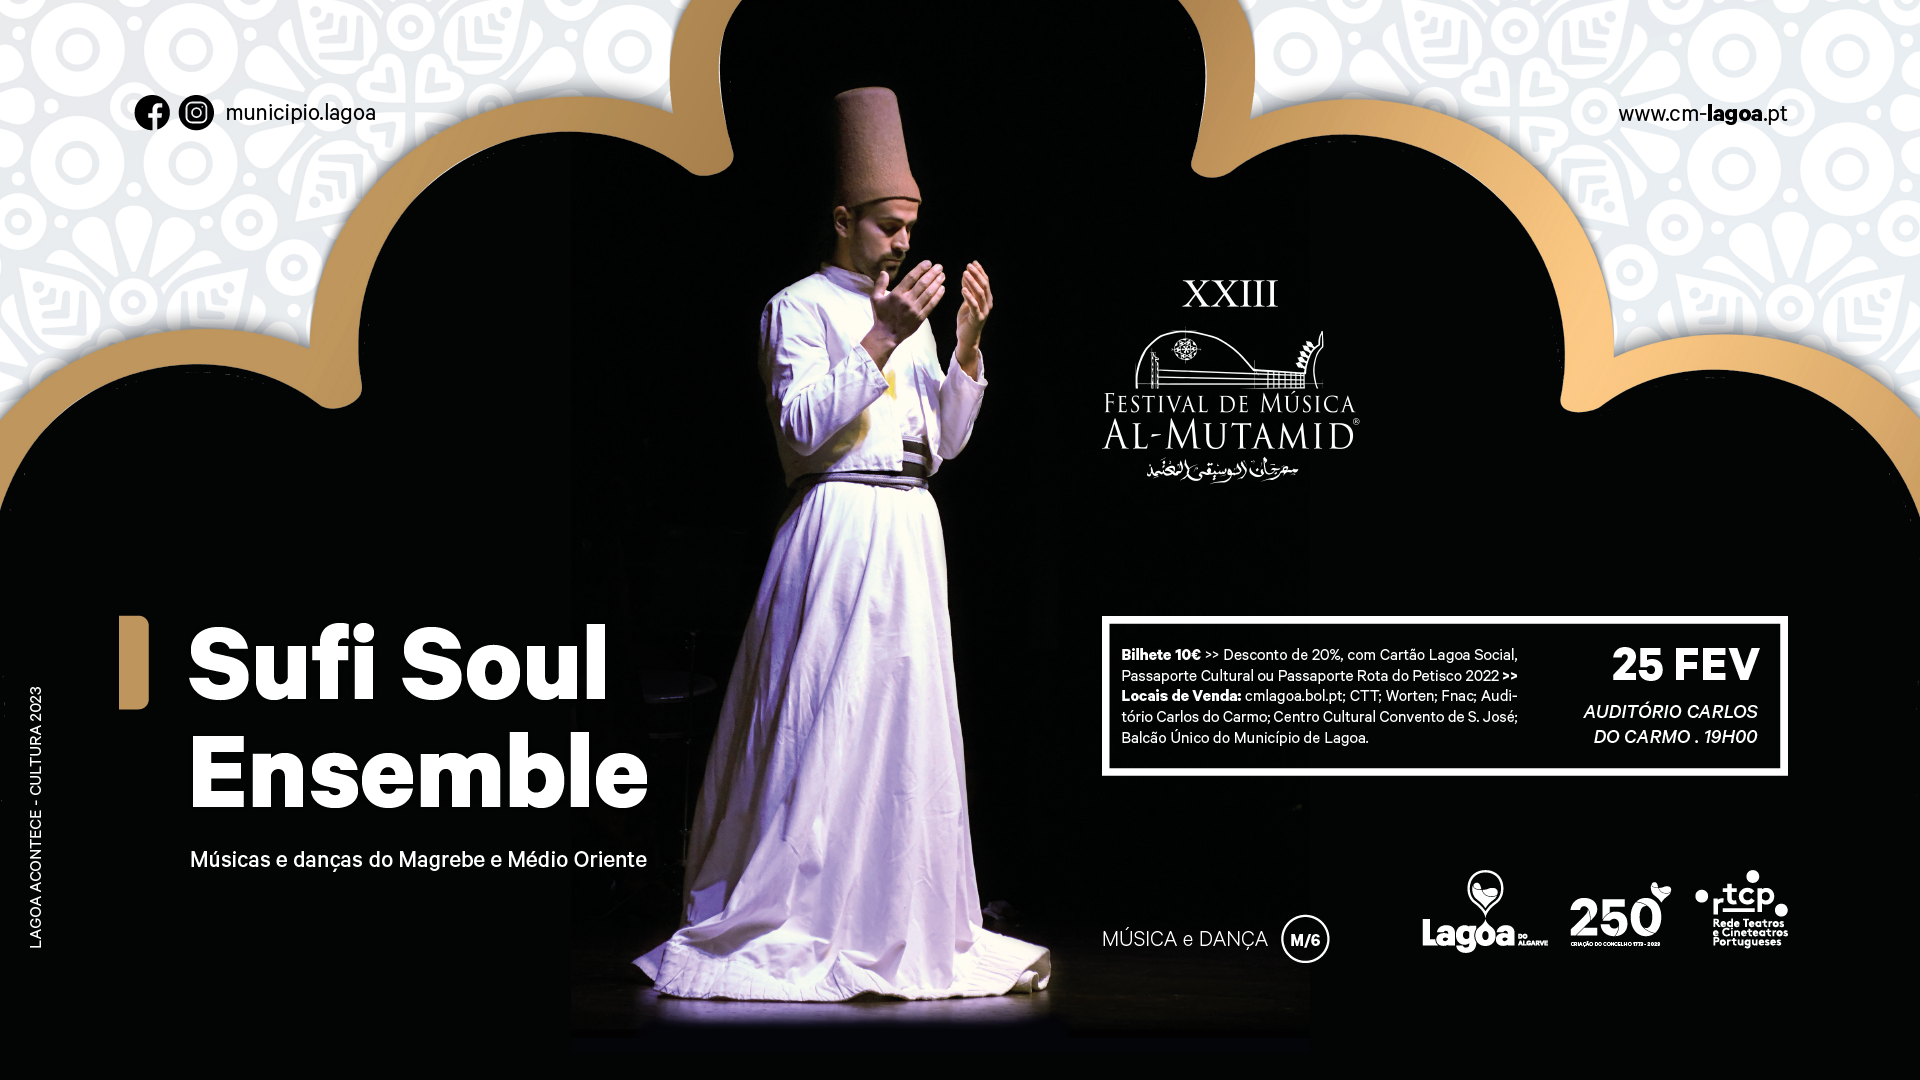 XXIII Festival de Música Al-Mutamid | "Sufi Soul Ensemble"